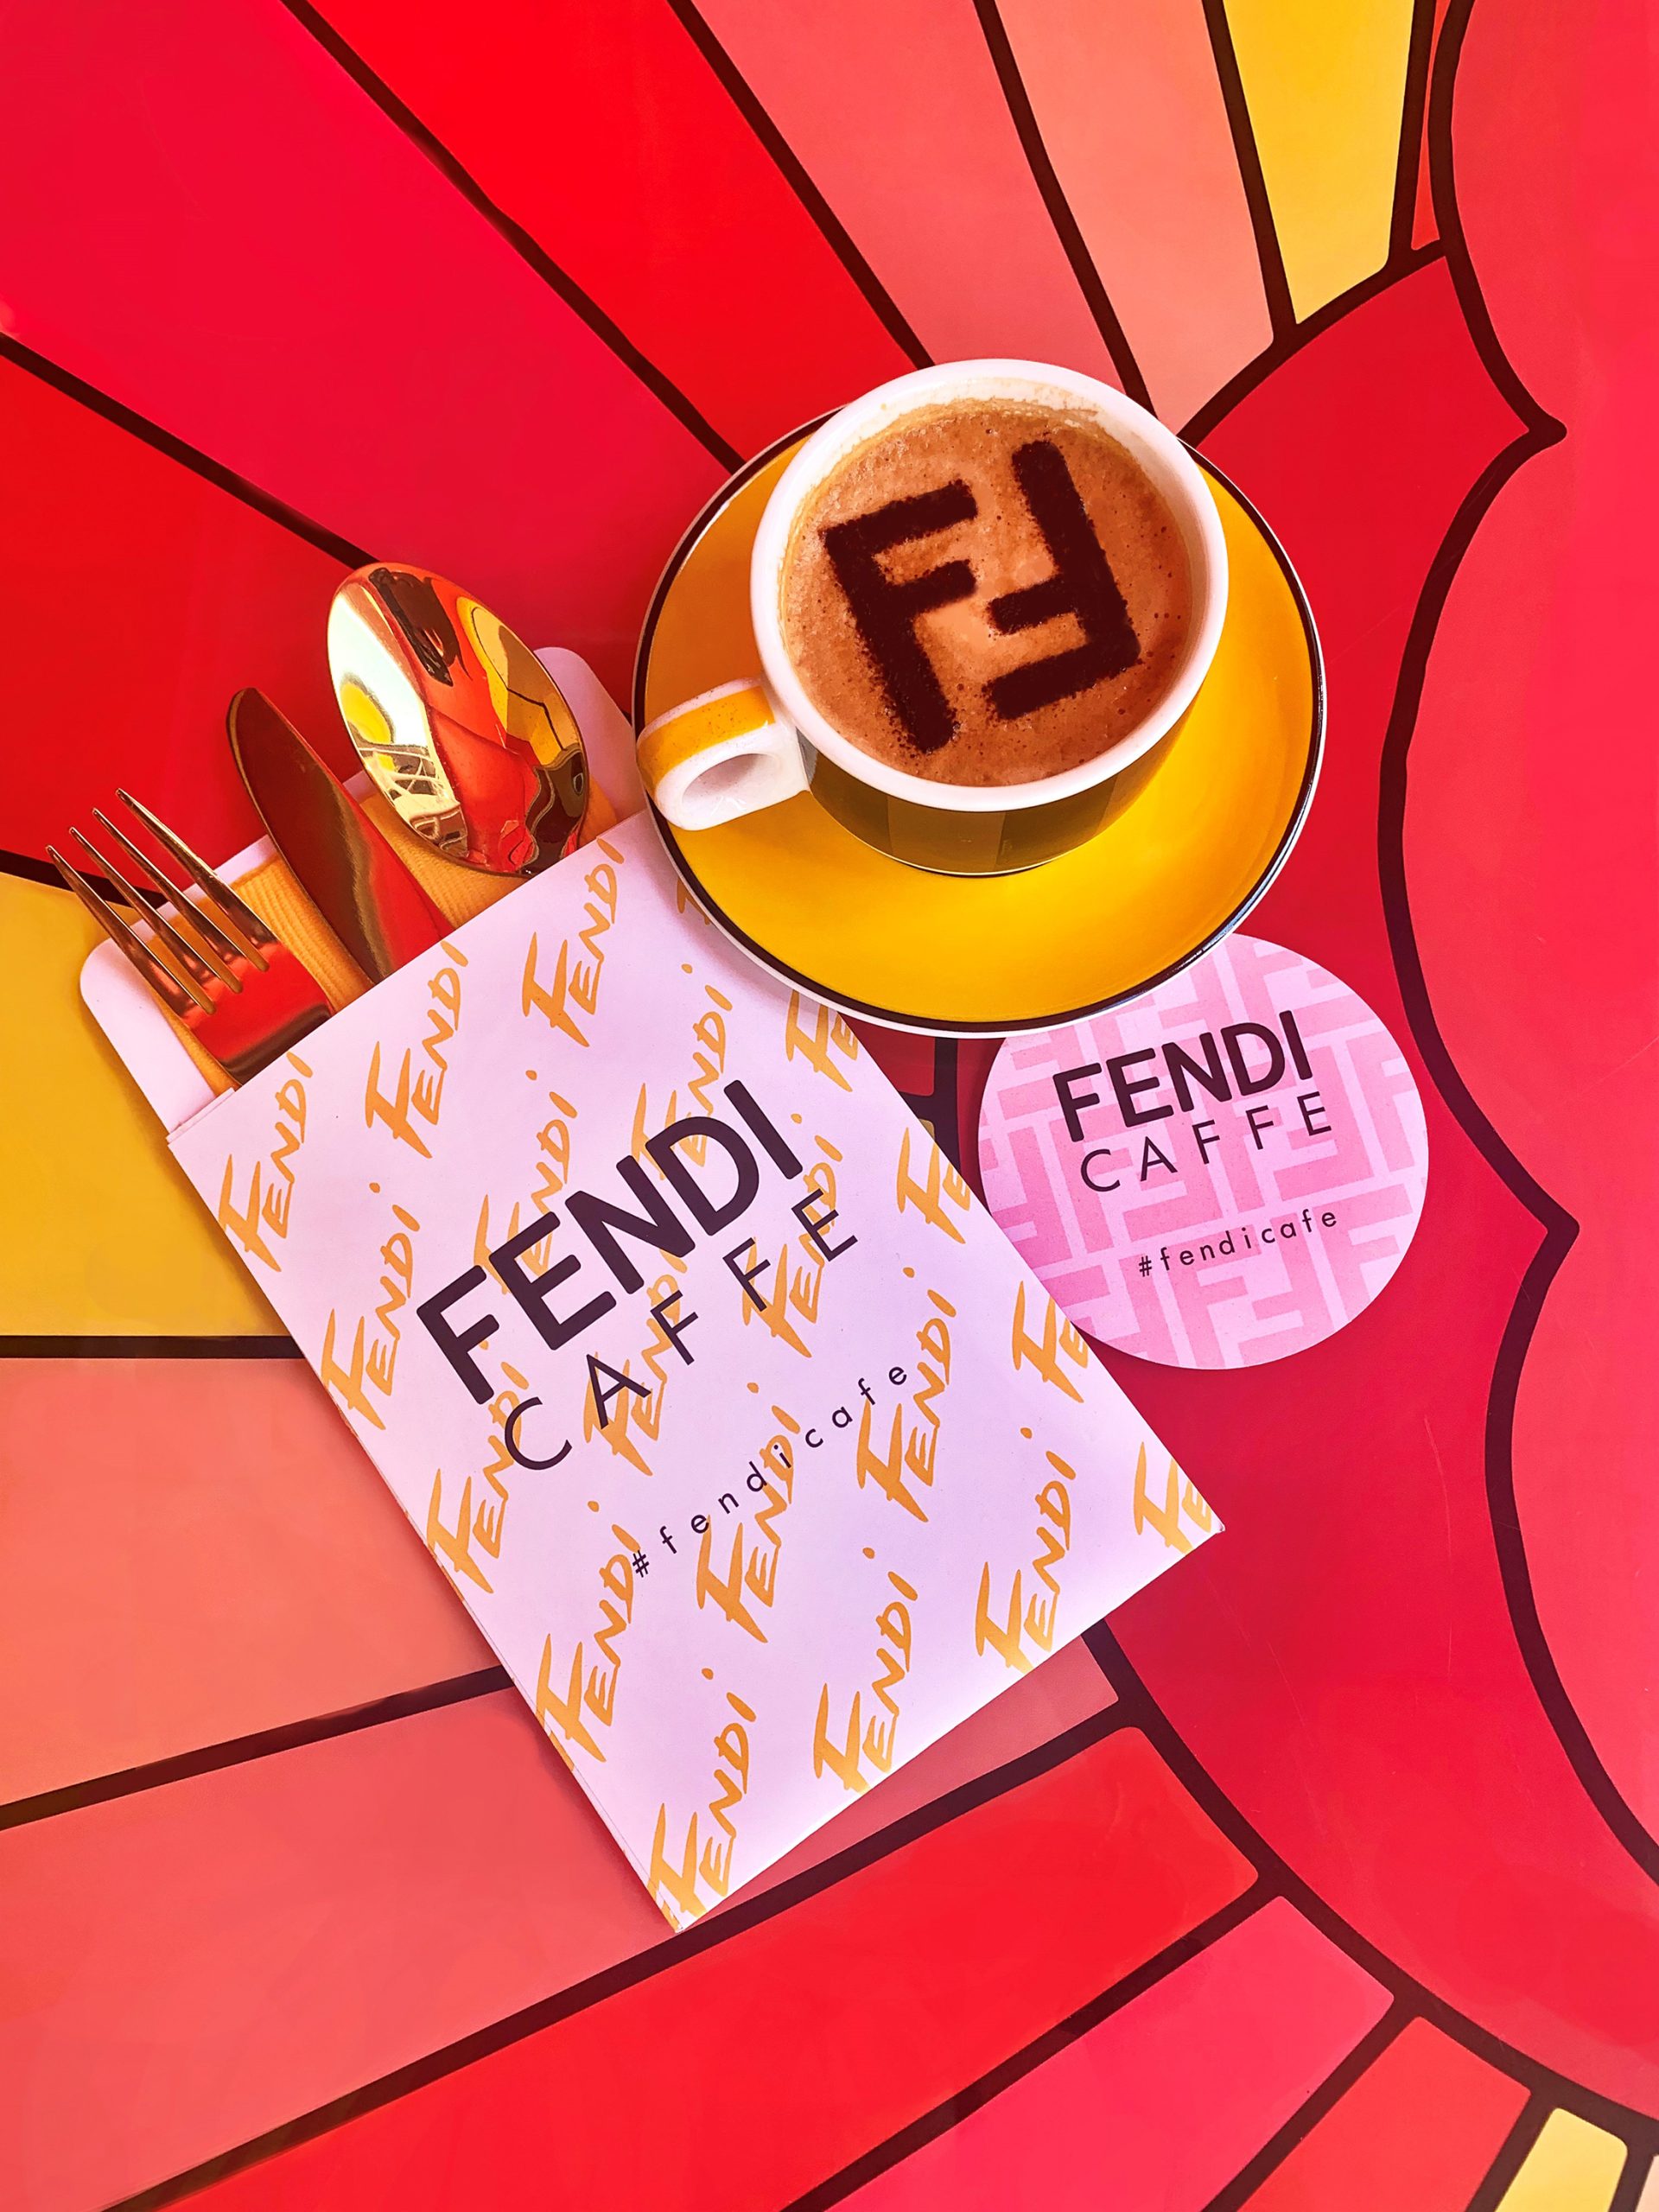 Fendi celebrates spring with their new Caffe